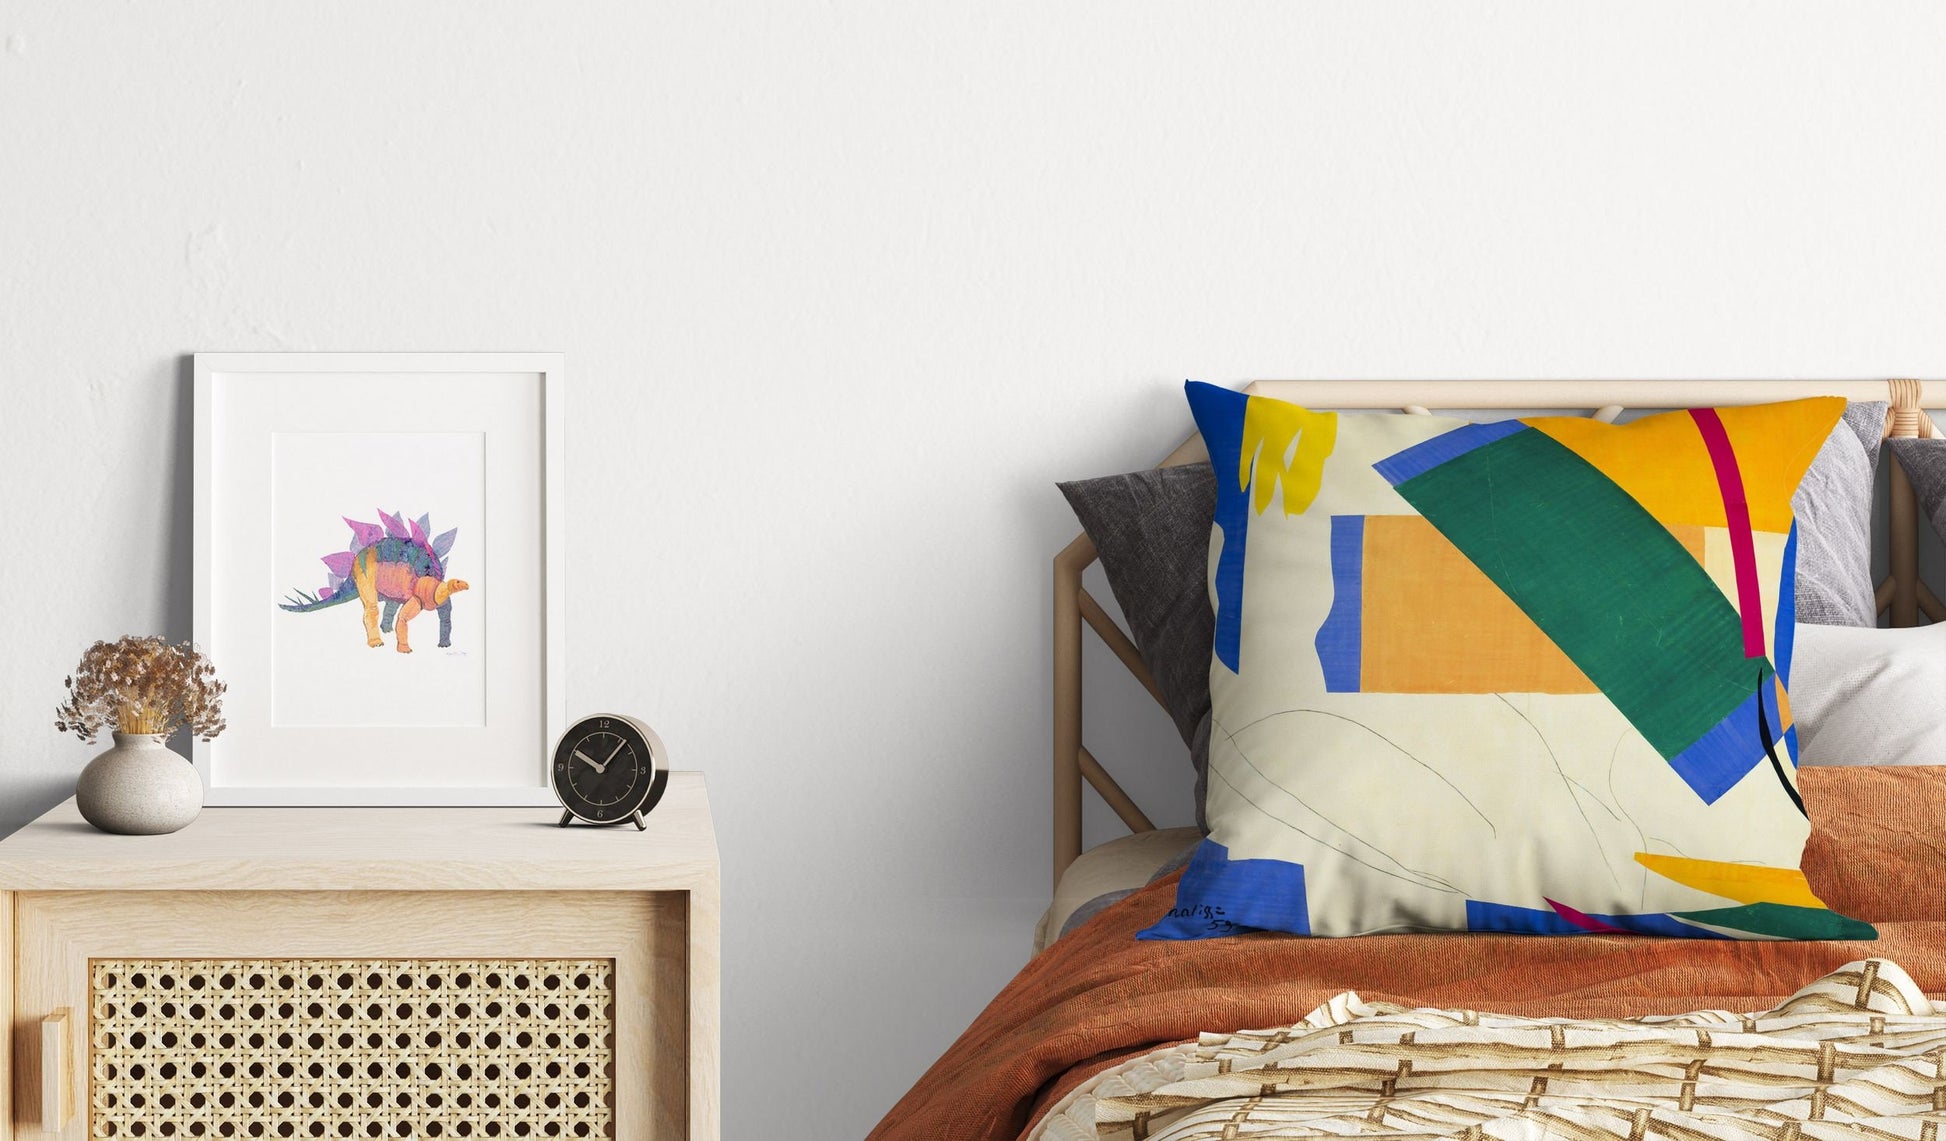 Henri Matisse Famous Art, Throw Pillow Cover, Abstract Throw Pillow Cover, Contemporary Pillow, 18 X 18 Pillow Covers, Home Decor Pillow